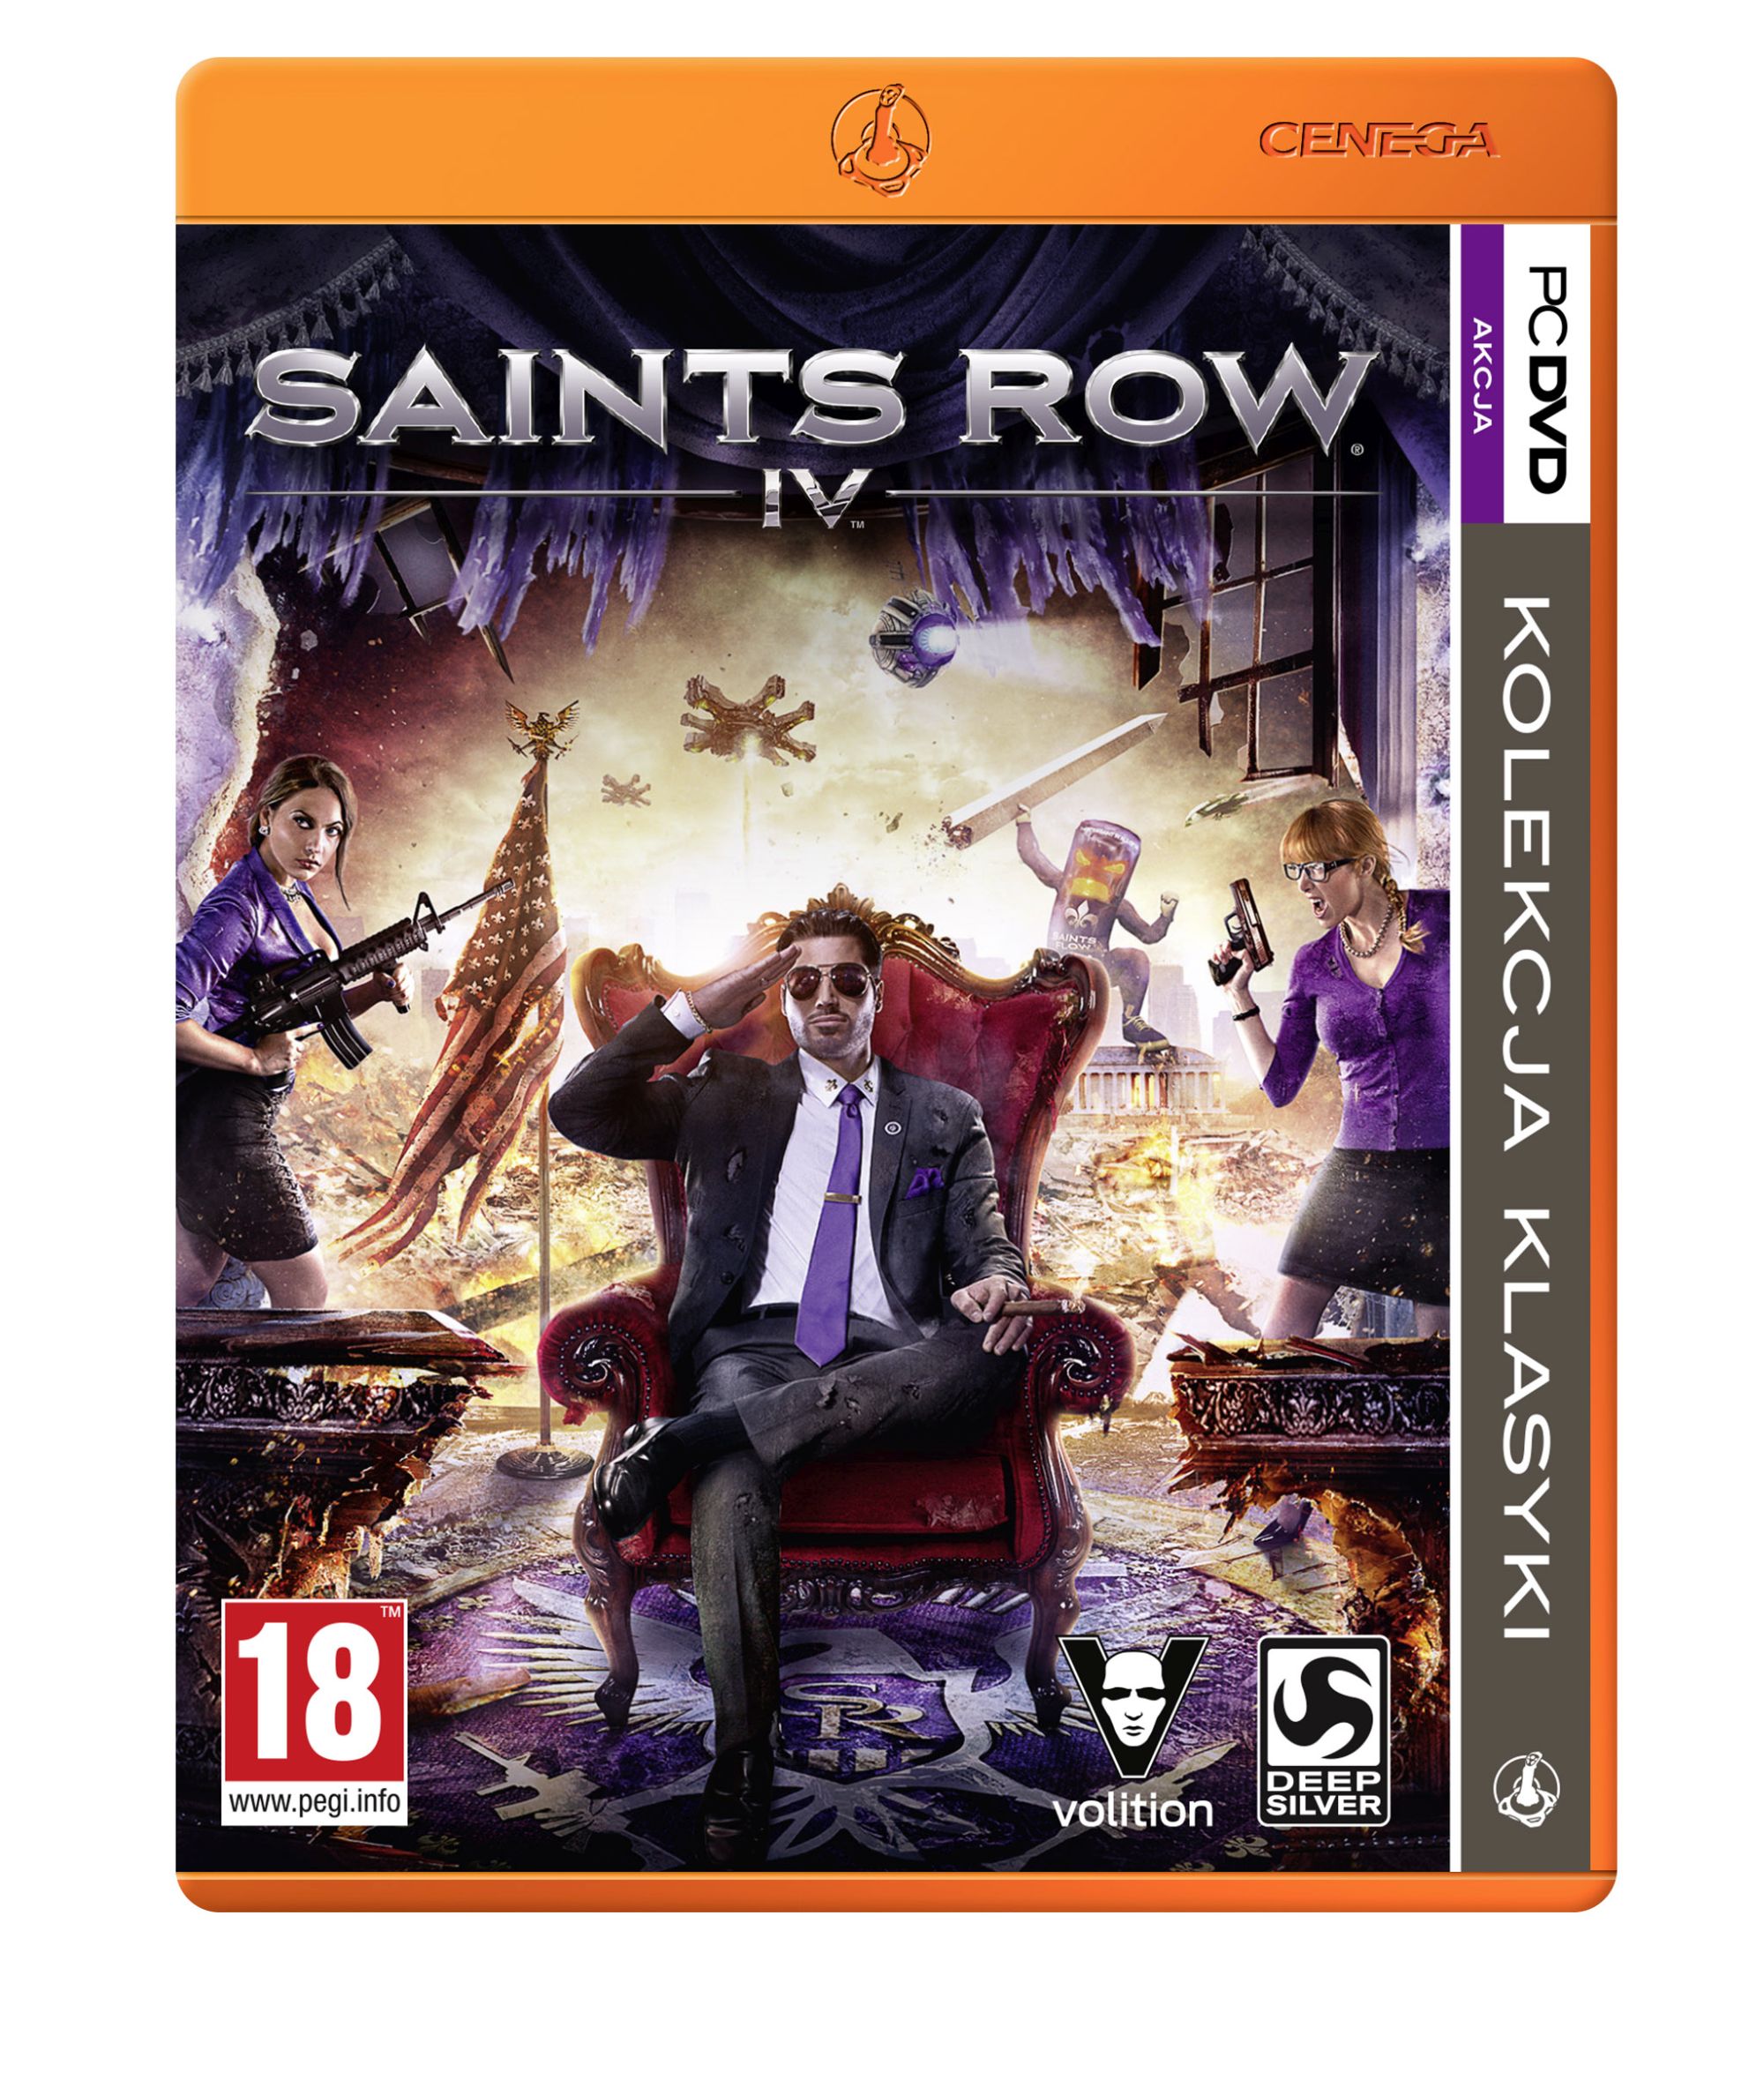 Okładka do Saints Row 4 - Commander in Chief Edition